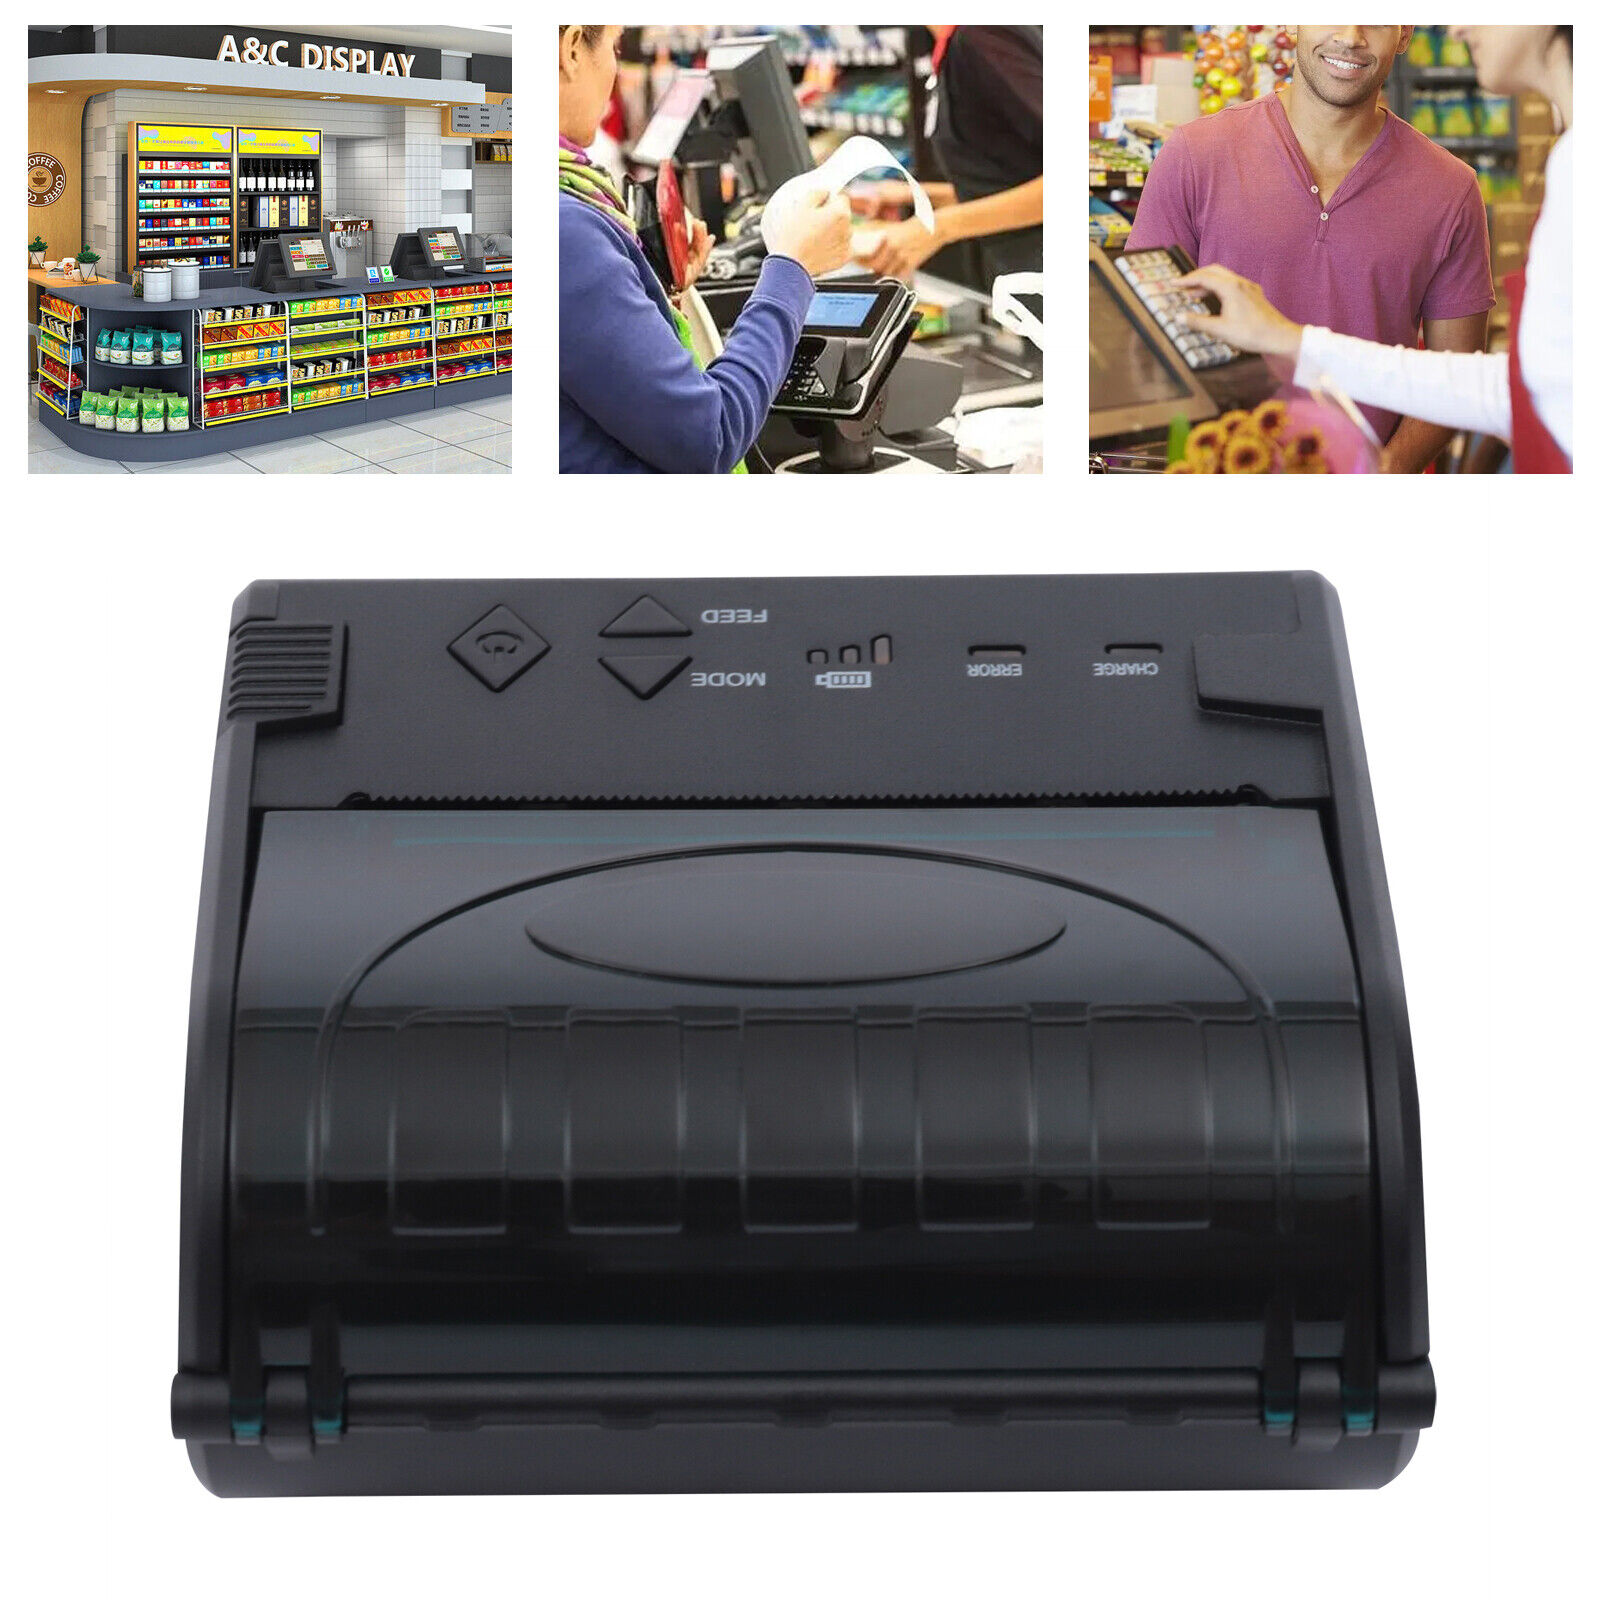 Kader nul Echt niet Bluetooth Thermal Receipt Printer 80mm Portable ESC/POS Bill Printer Shop  USB | eBay